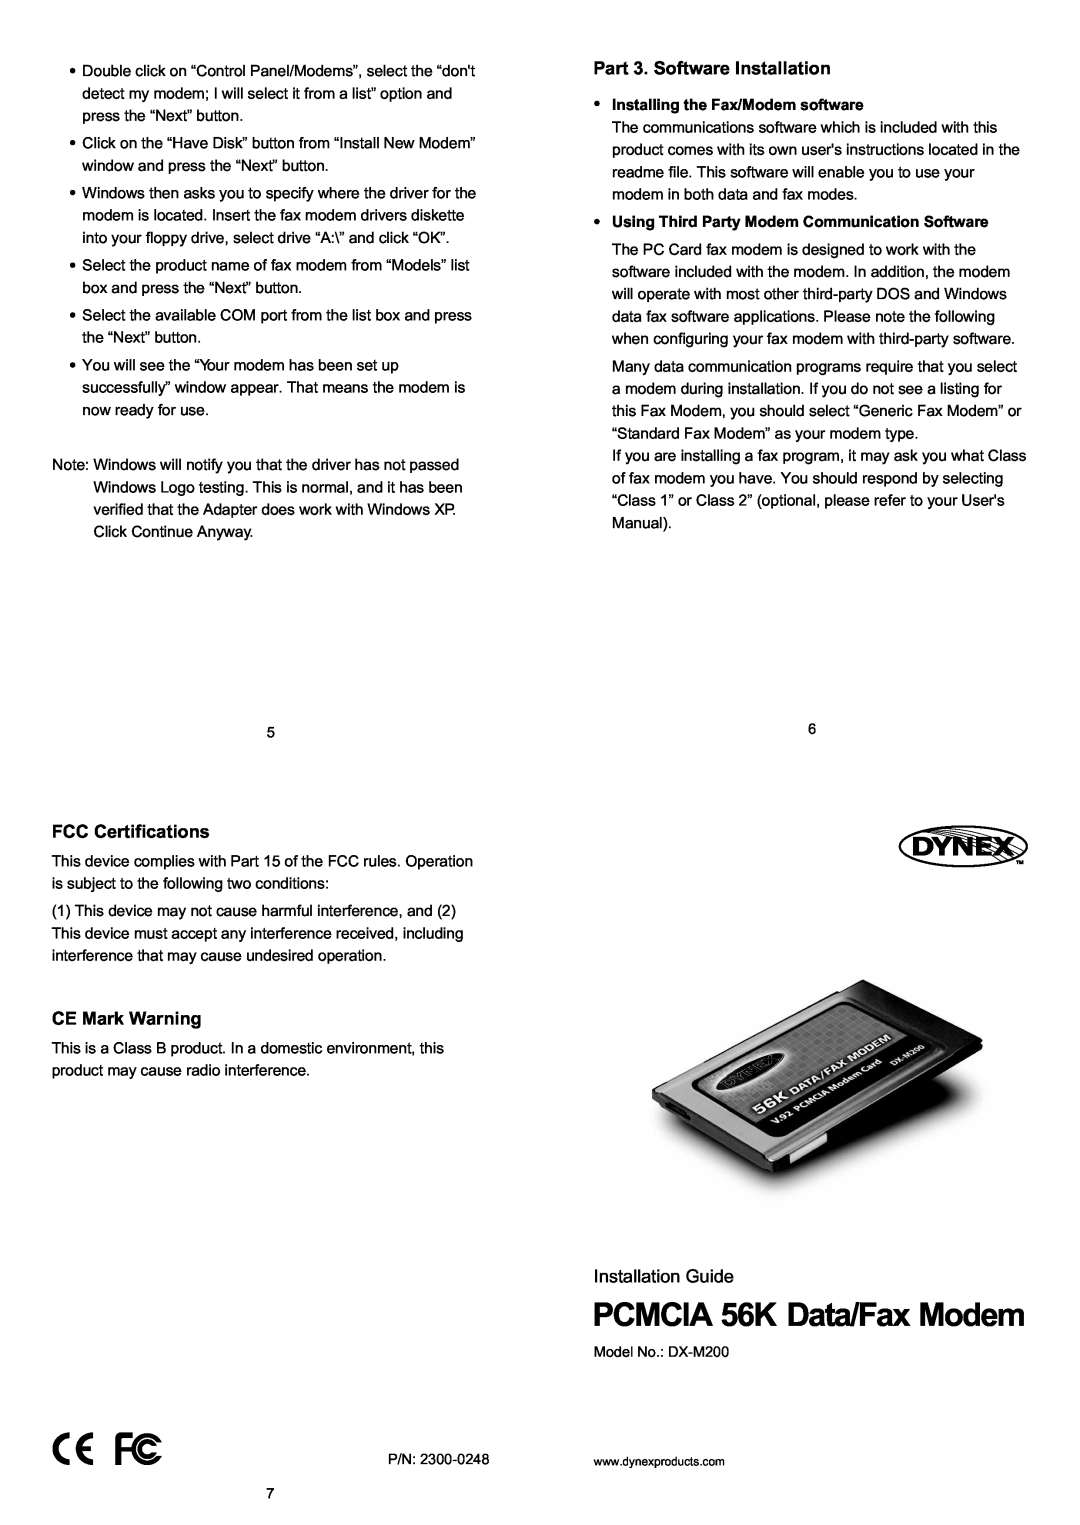 Dynex 2300-0248 user manual FCC Certifications, CE Mark Warning, Part 3. Software Installation, PCMCIA 56K Data/Fax Modem 